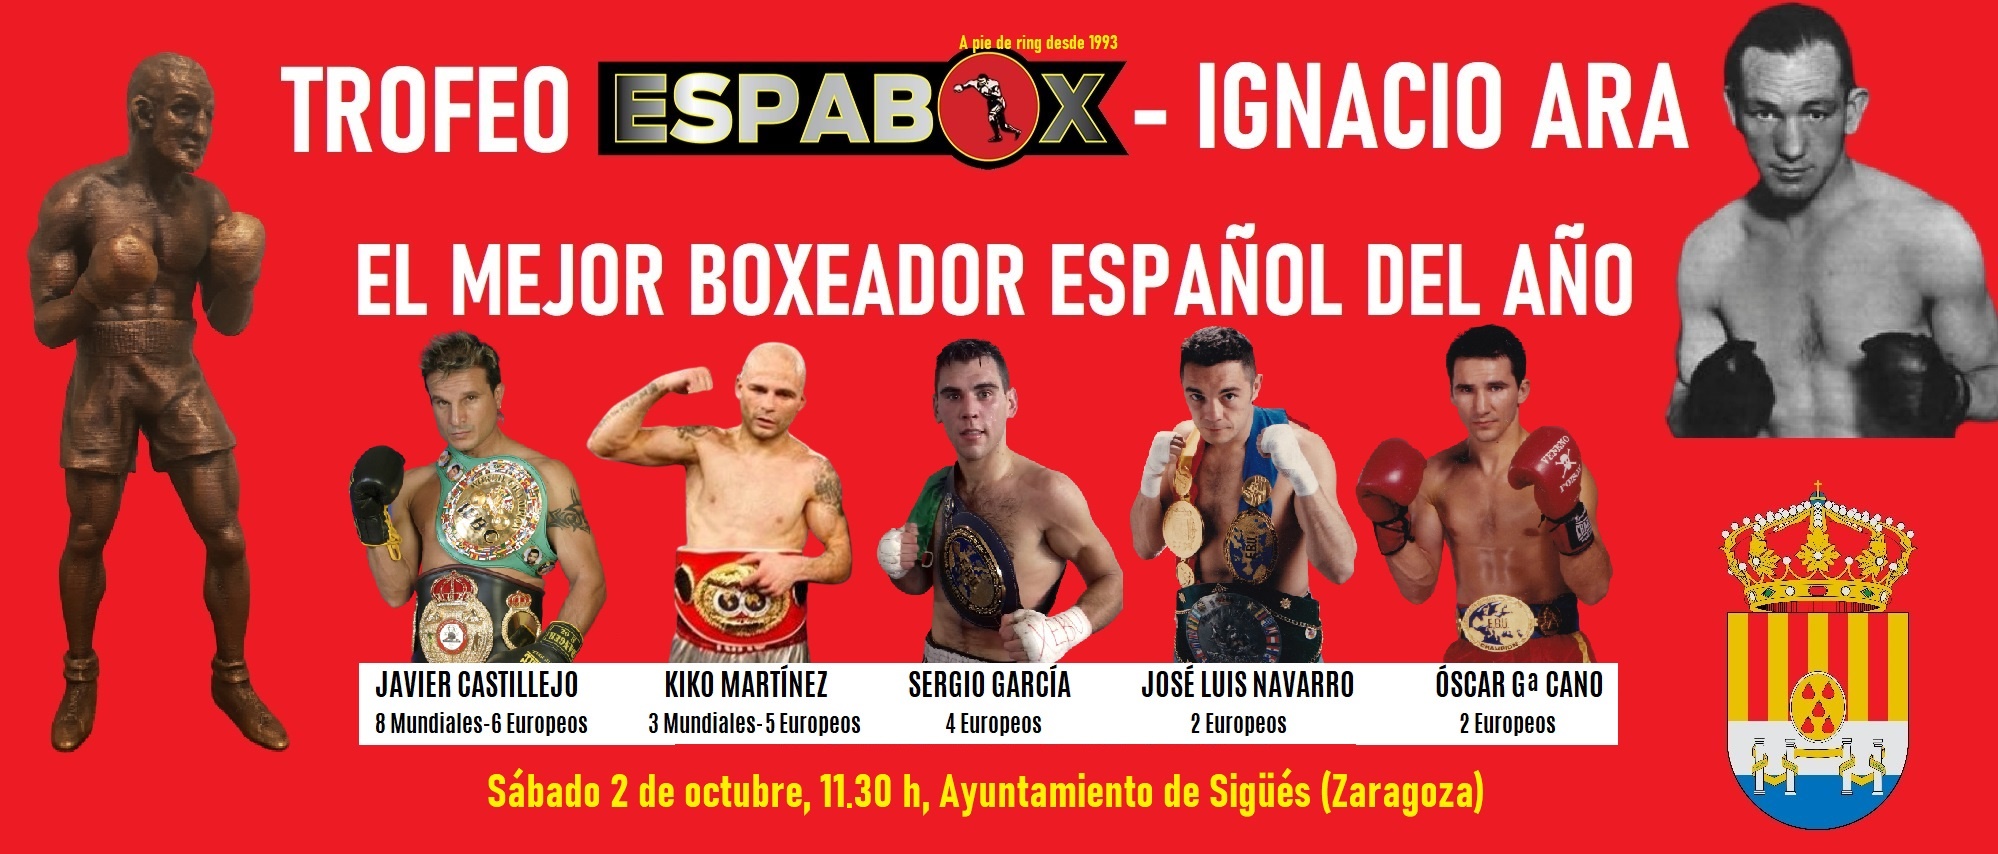 Sigs acoger la II edicin del Trofeo de Boxeo Espabox-Ignacio Ara